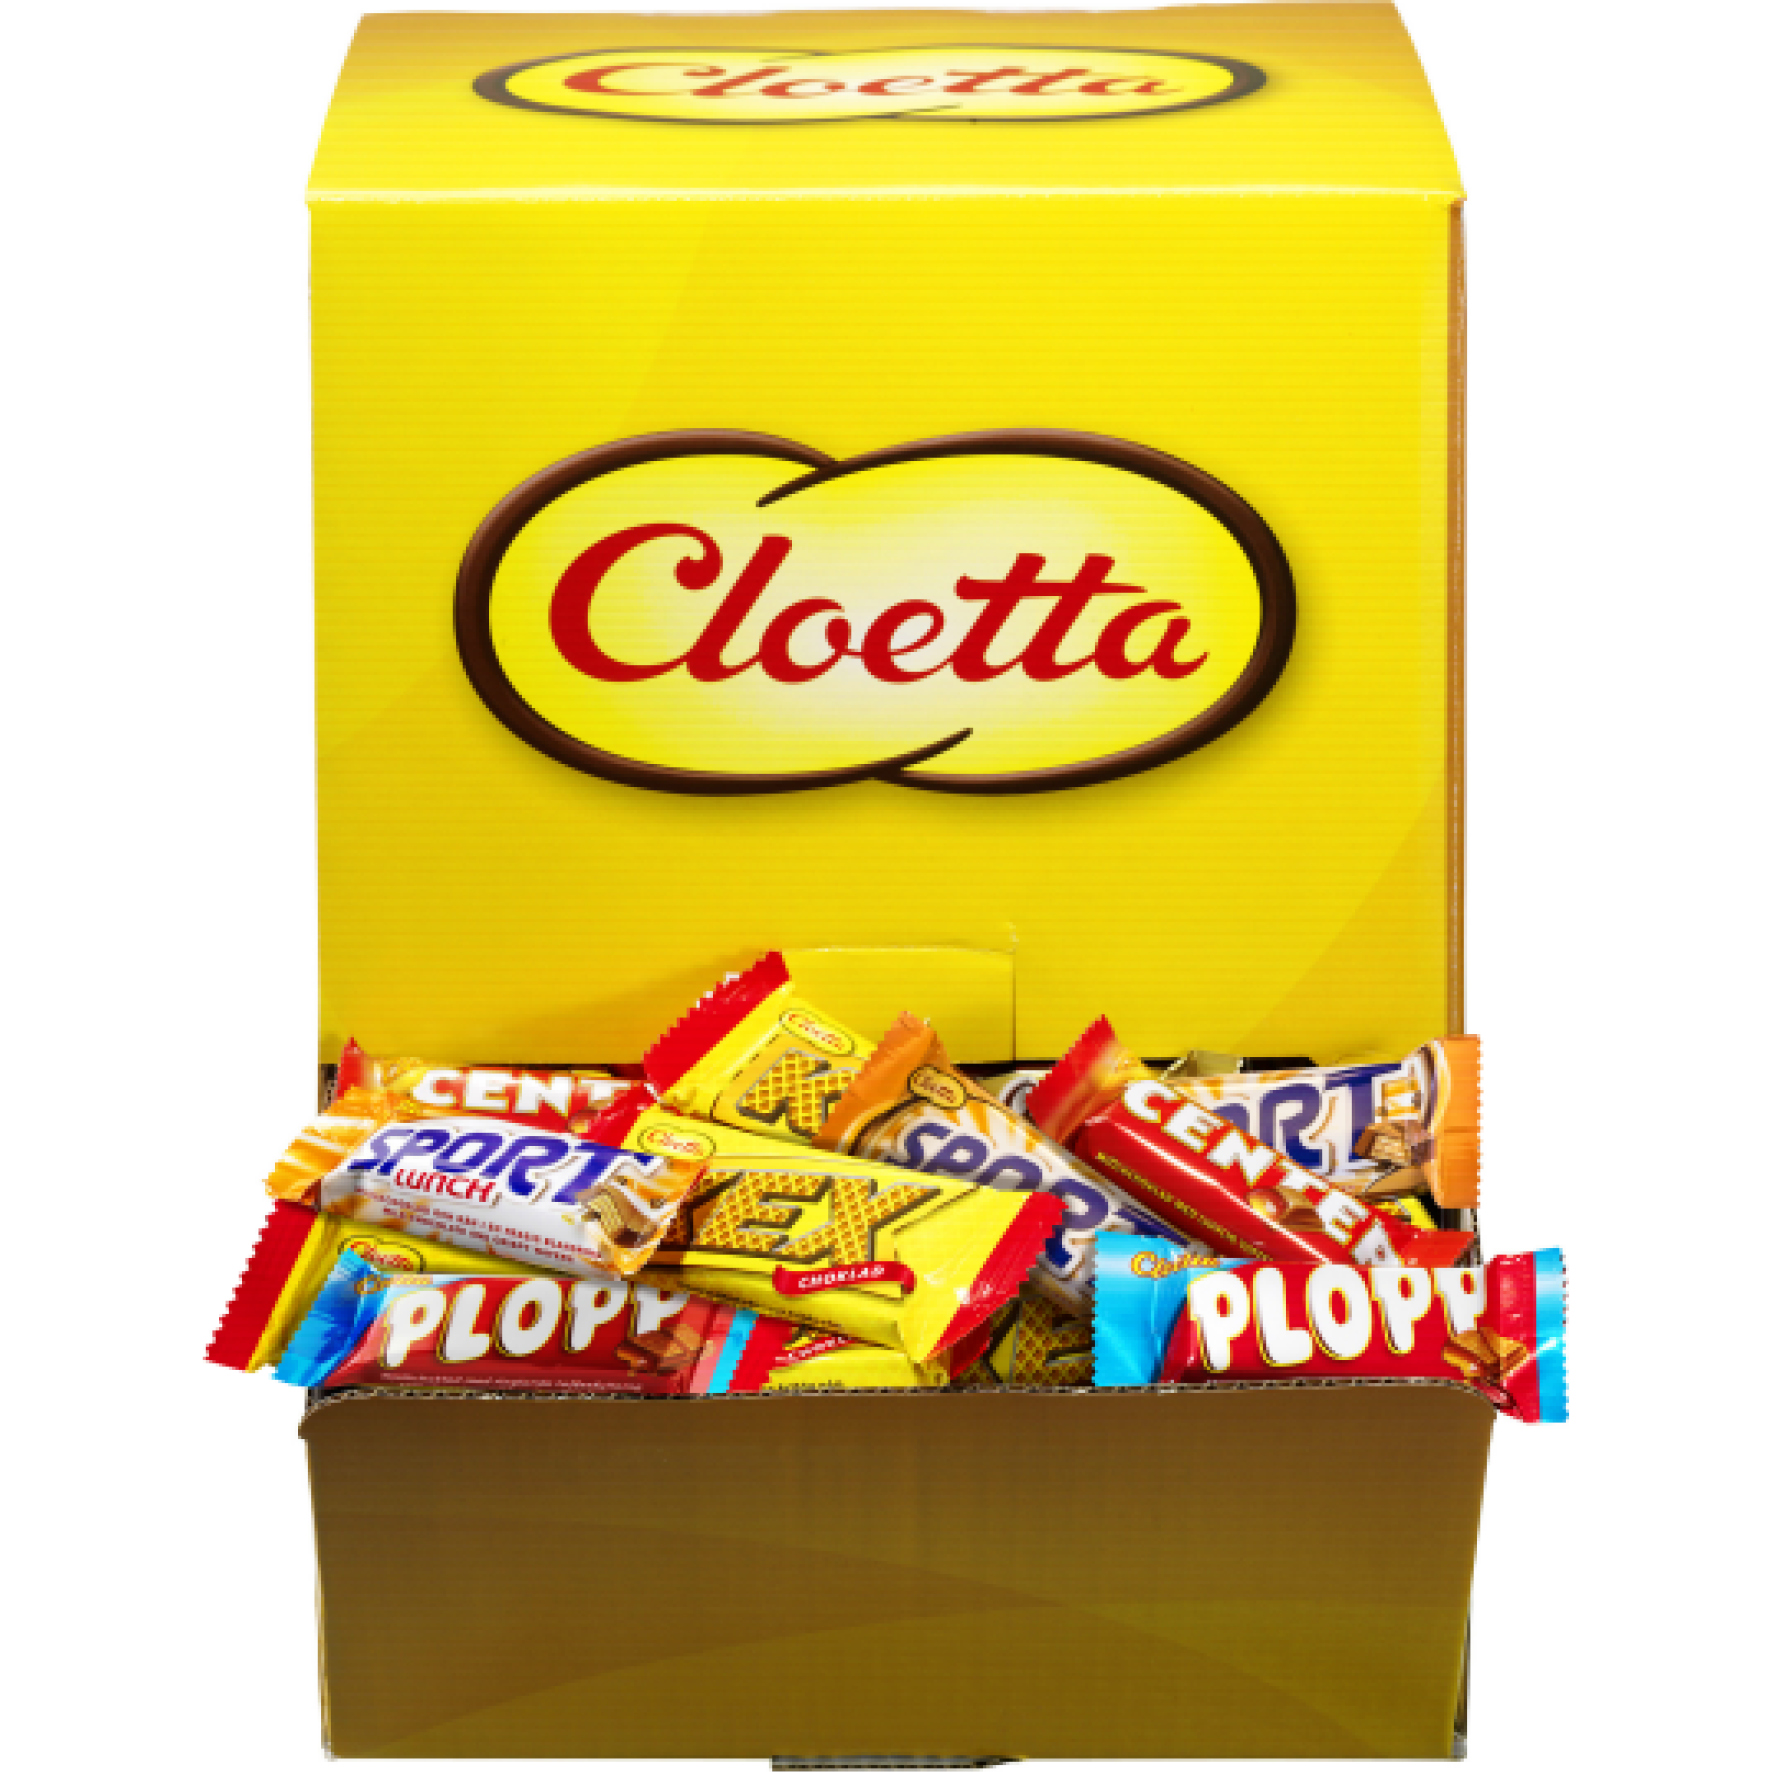 [8551737] Cloetta mix stycksaker